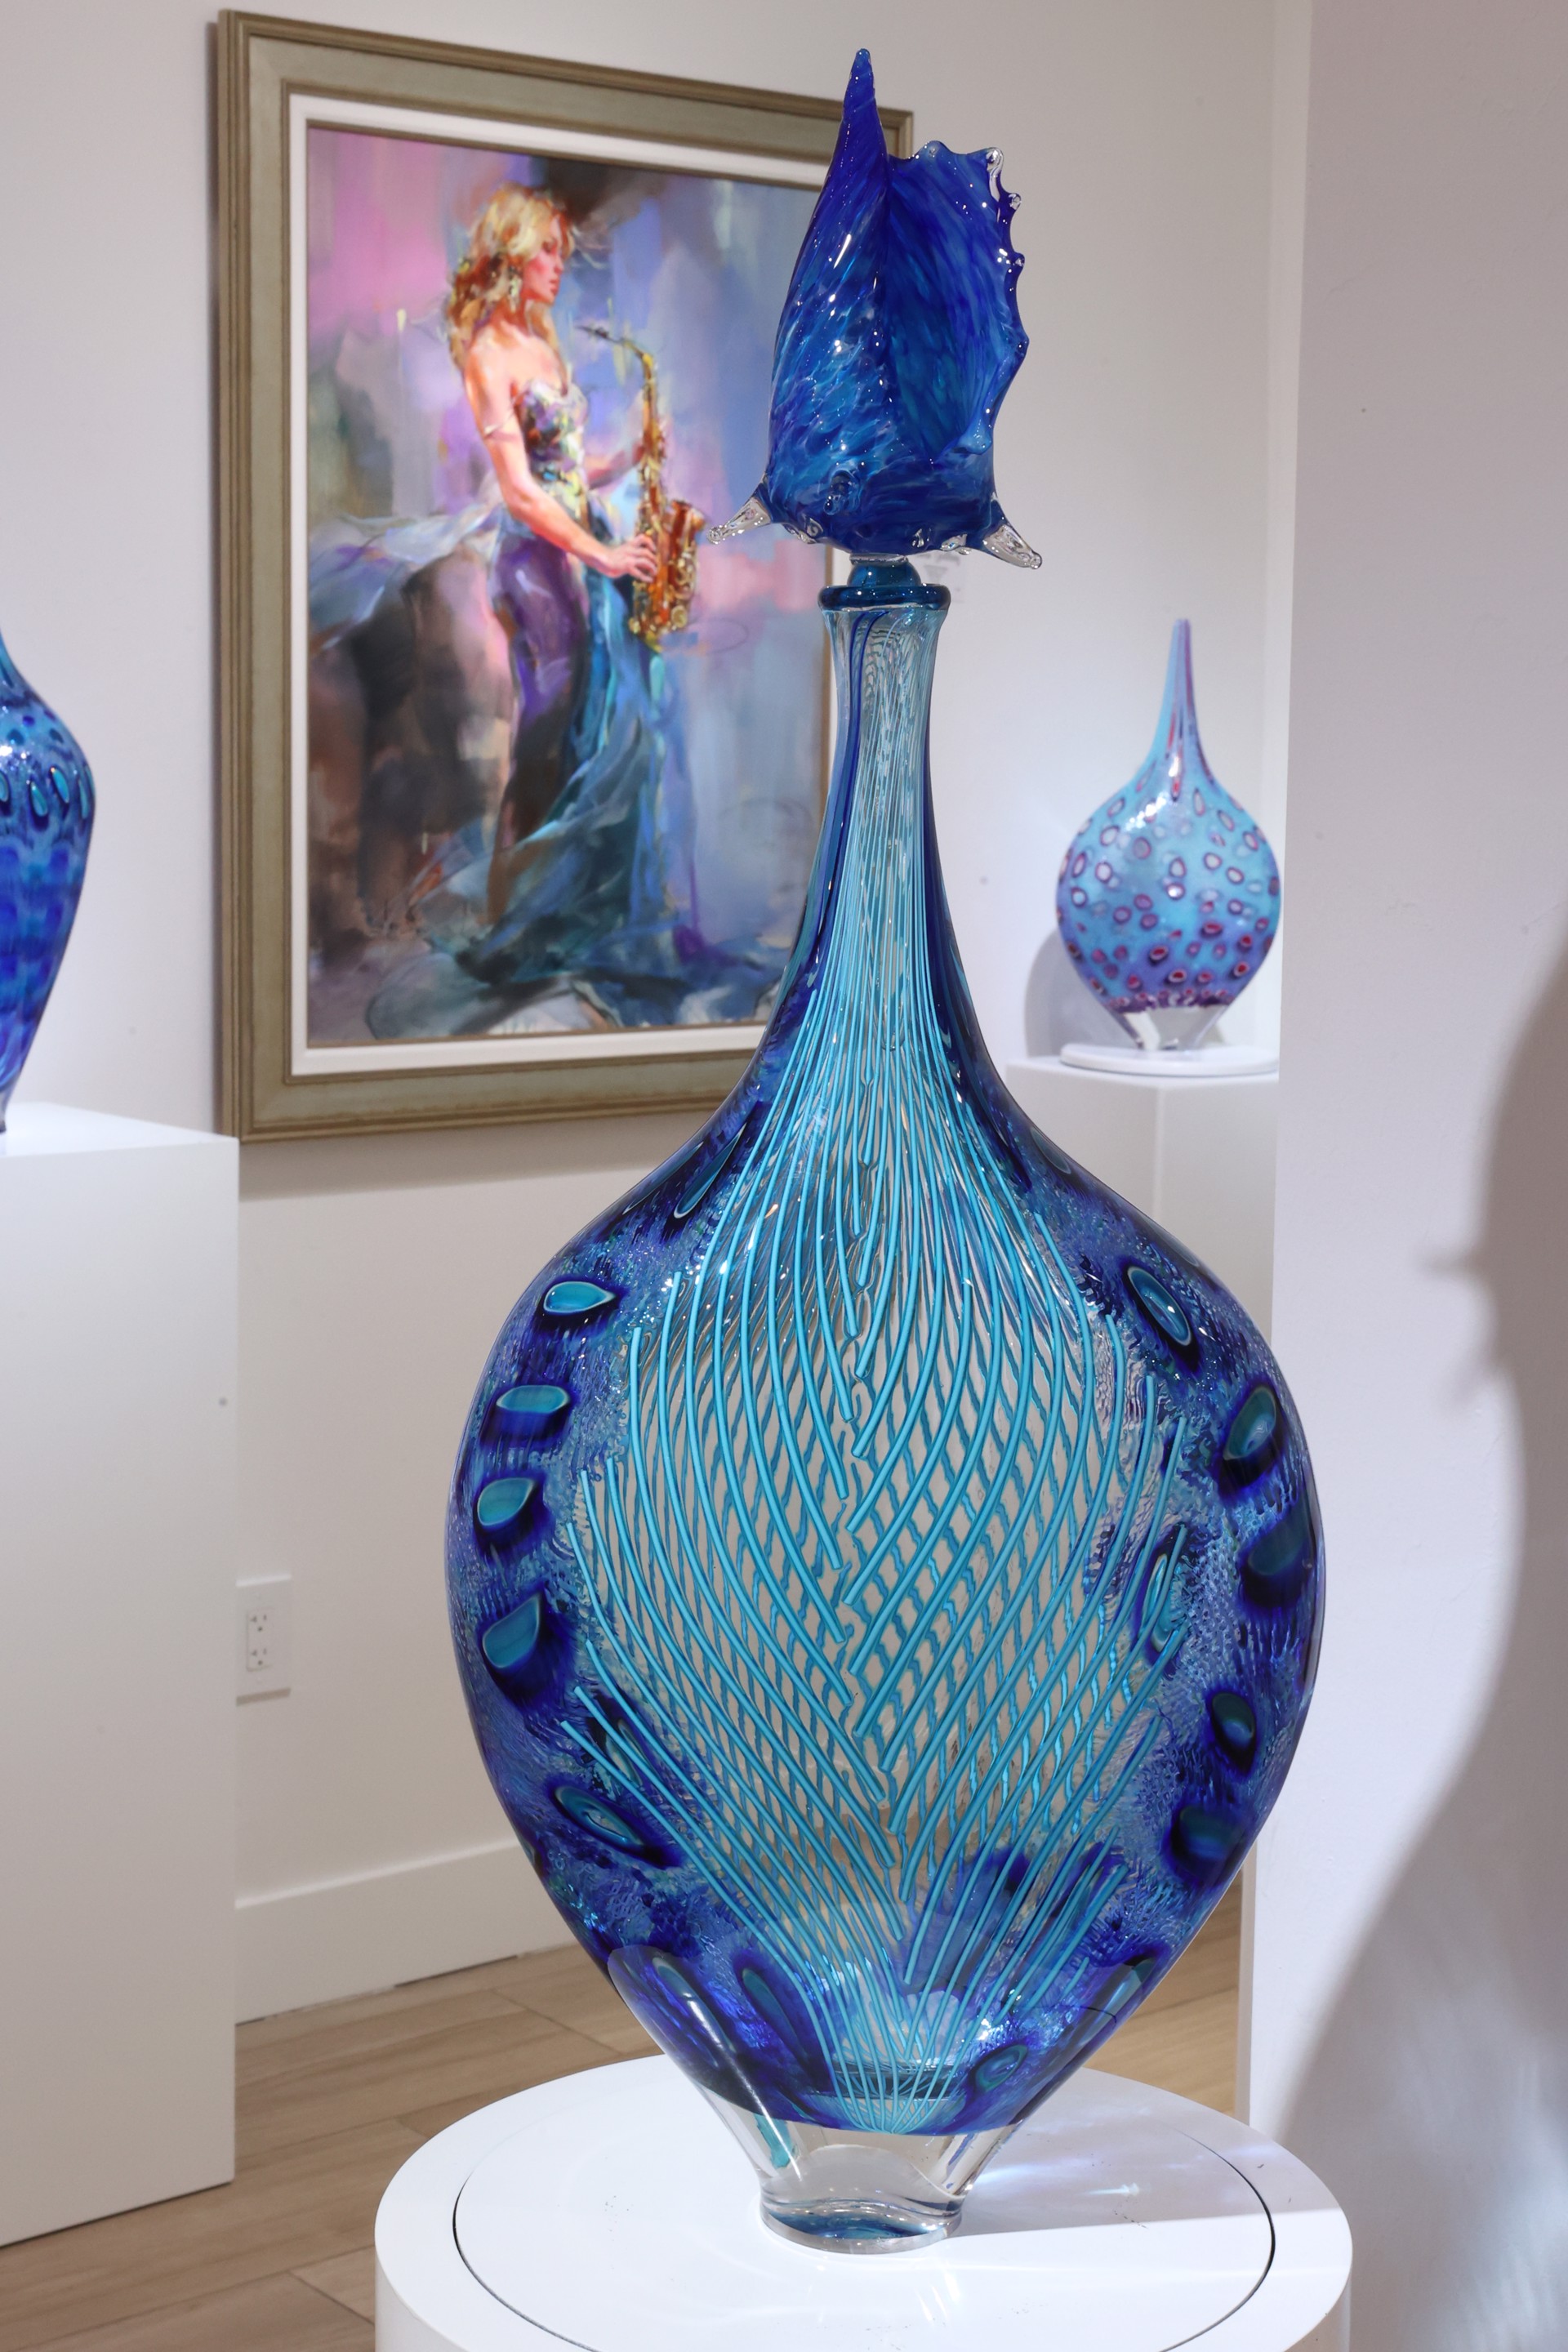 "Blue Vase" by Andrew Libecki